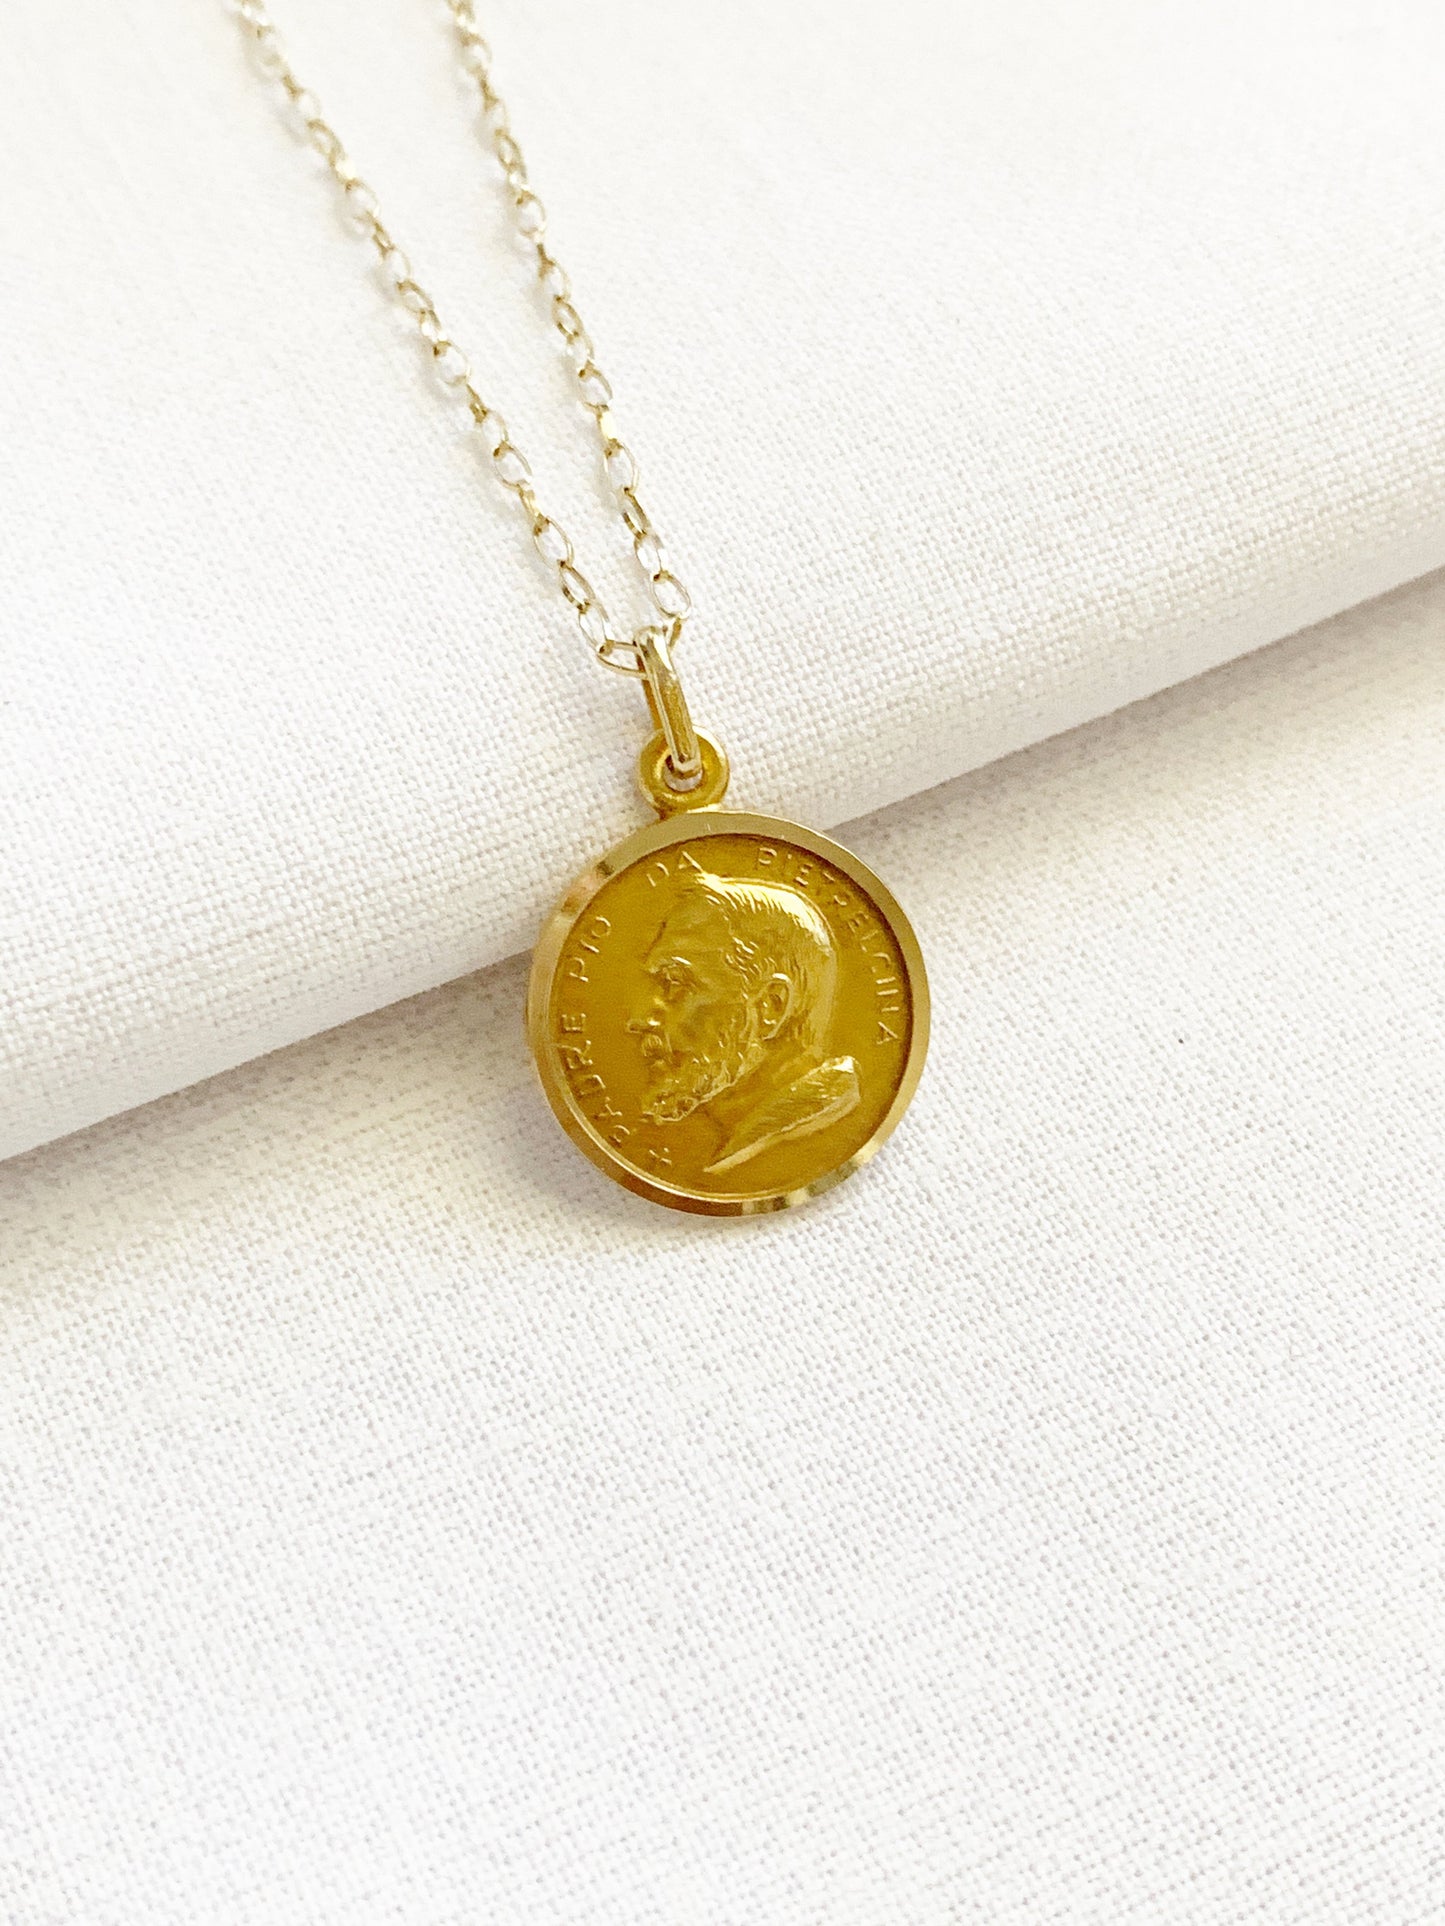 RARE Vintage 9ct Gold Medallion "Padre Pio" Pendant Necklace